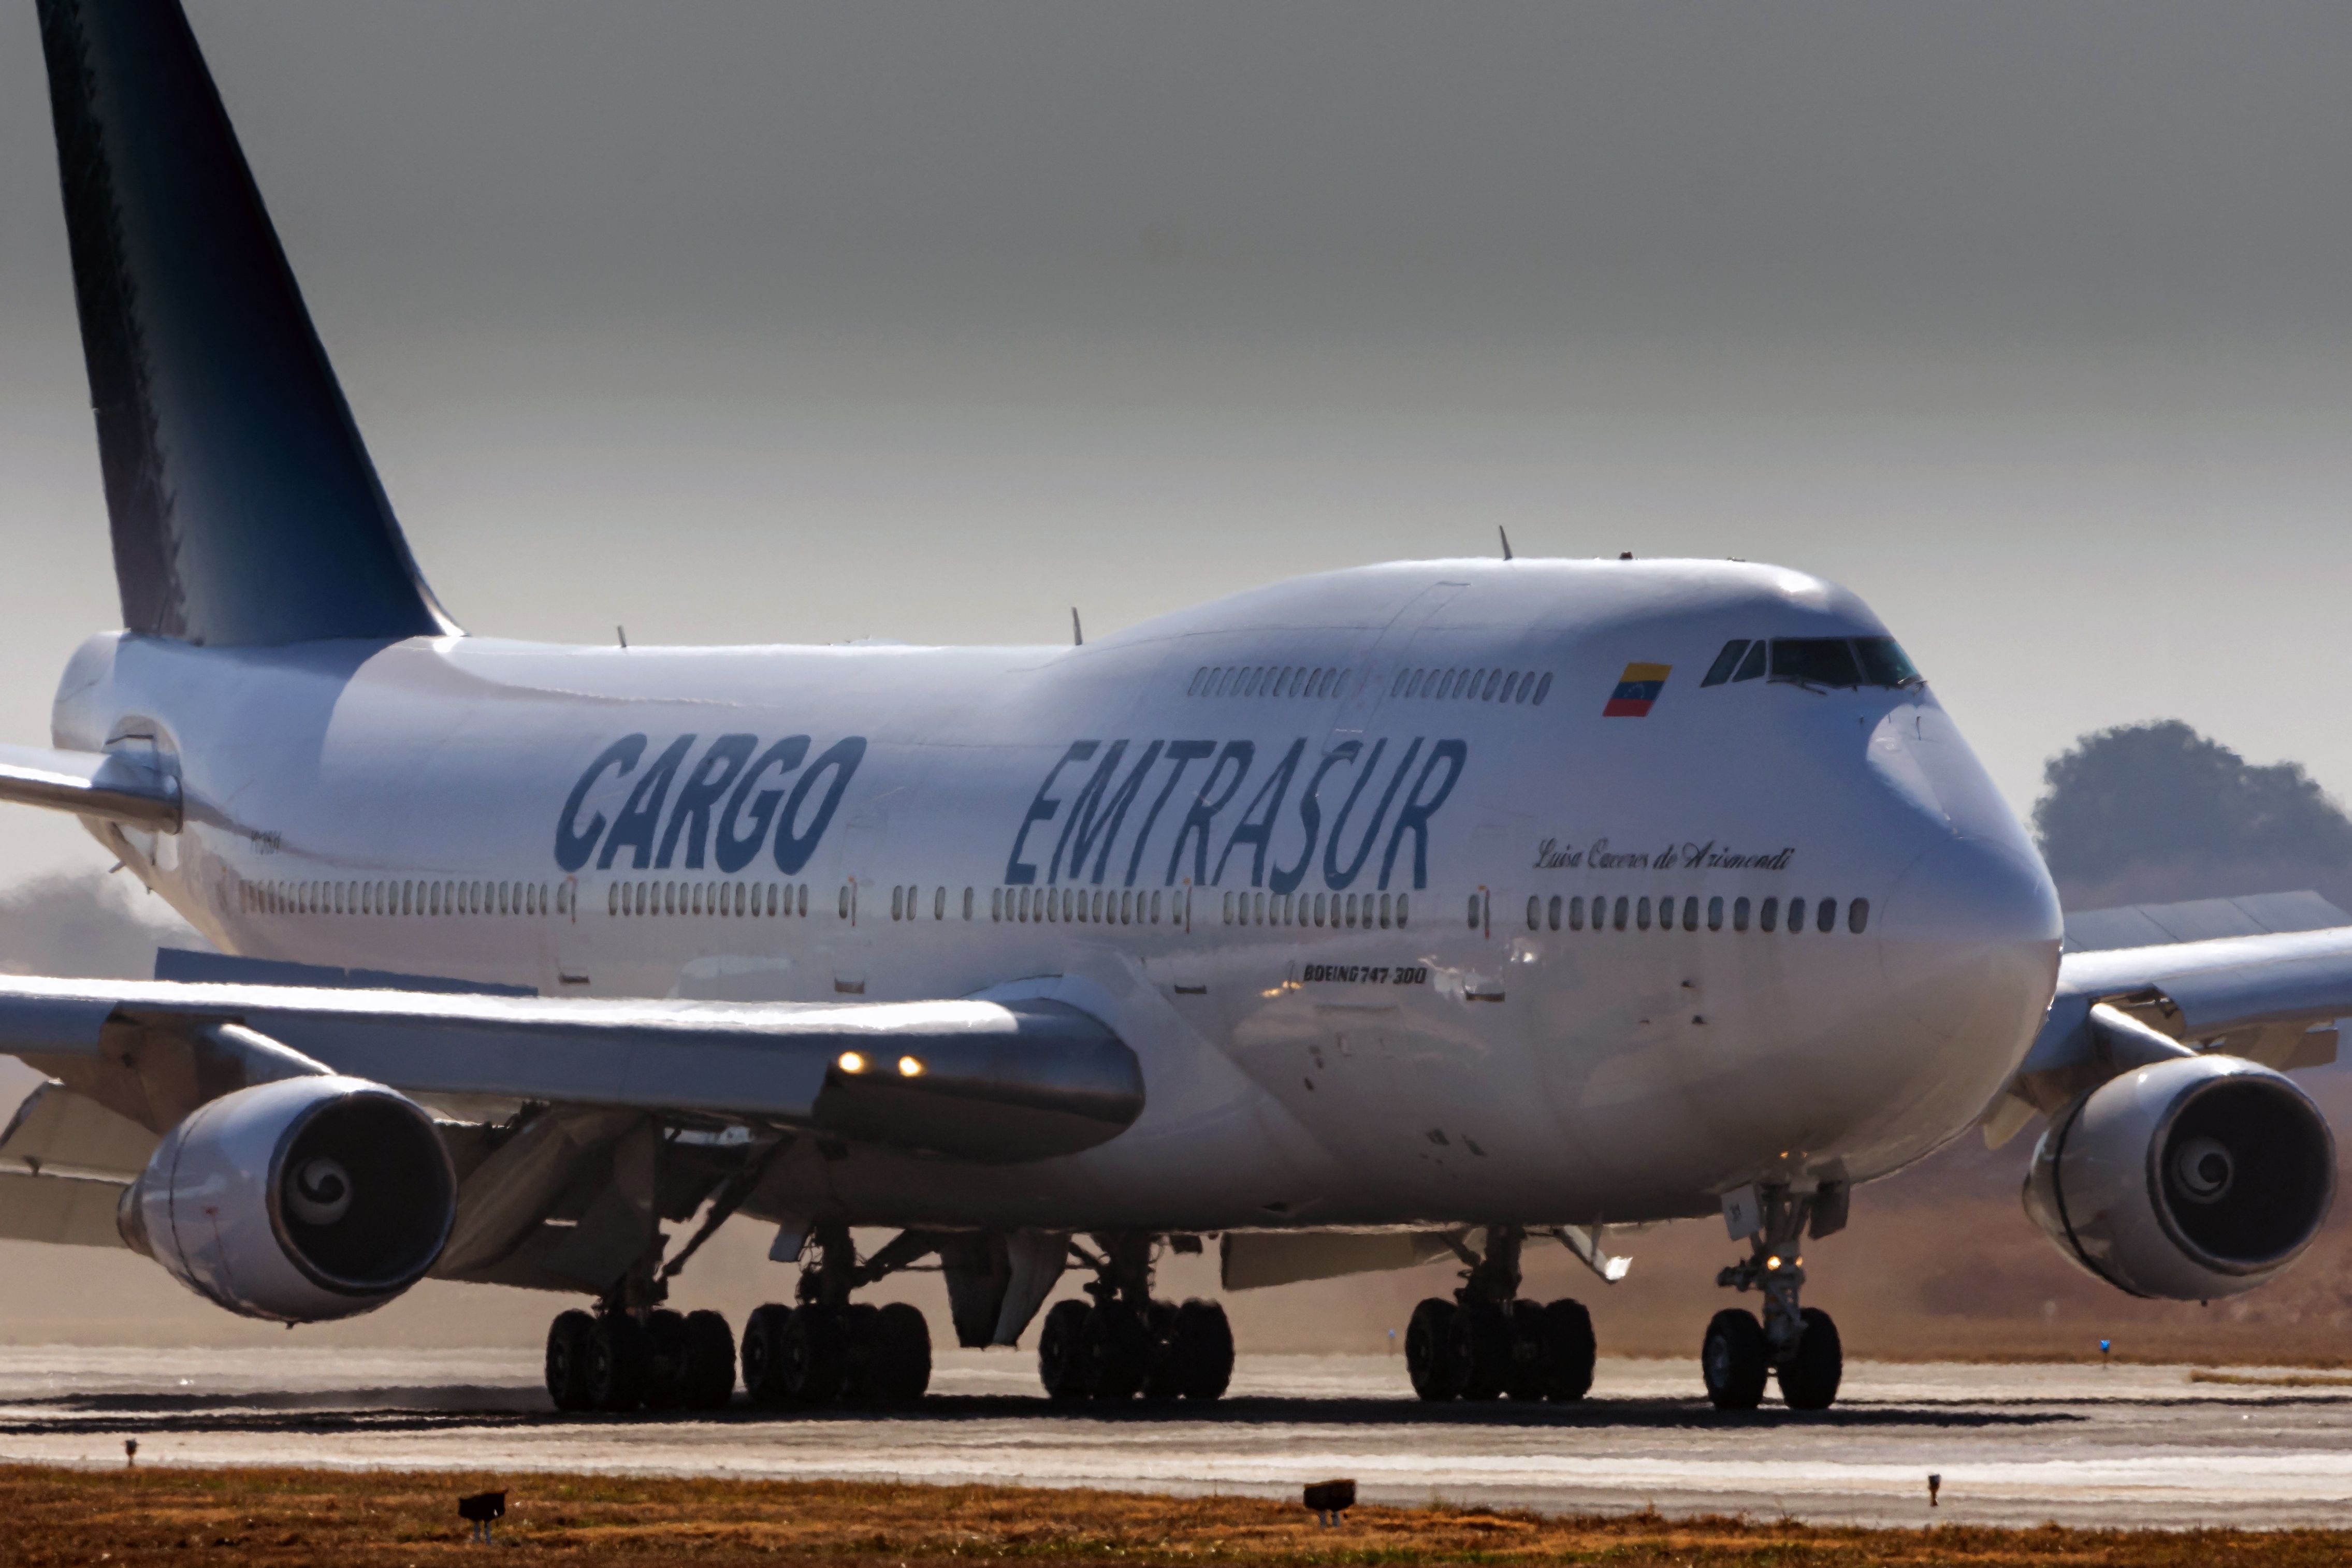 Emtrasur Cargo Boeing 747-300M